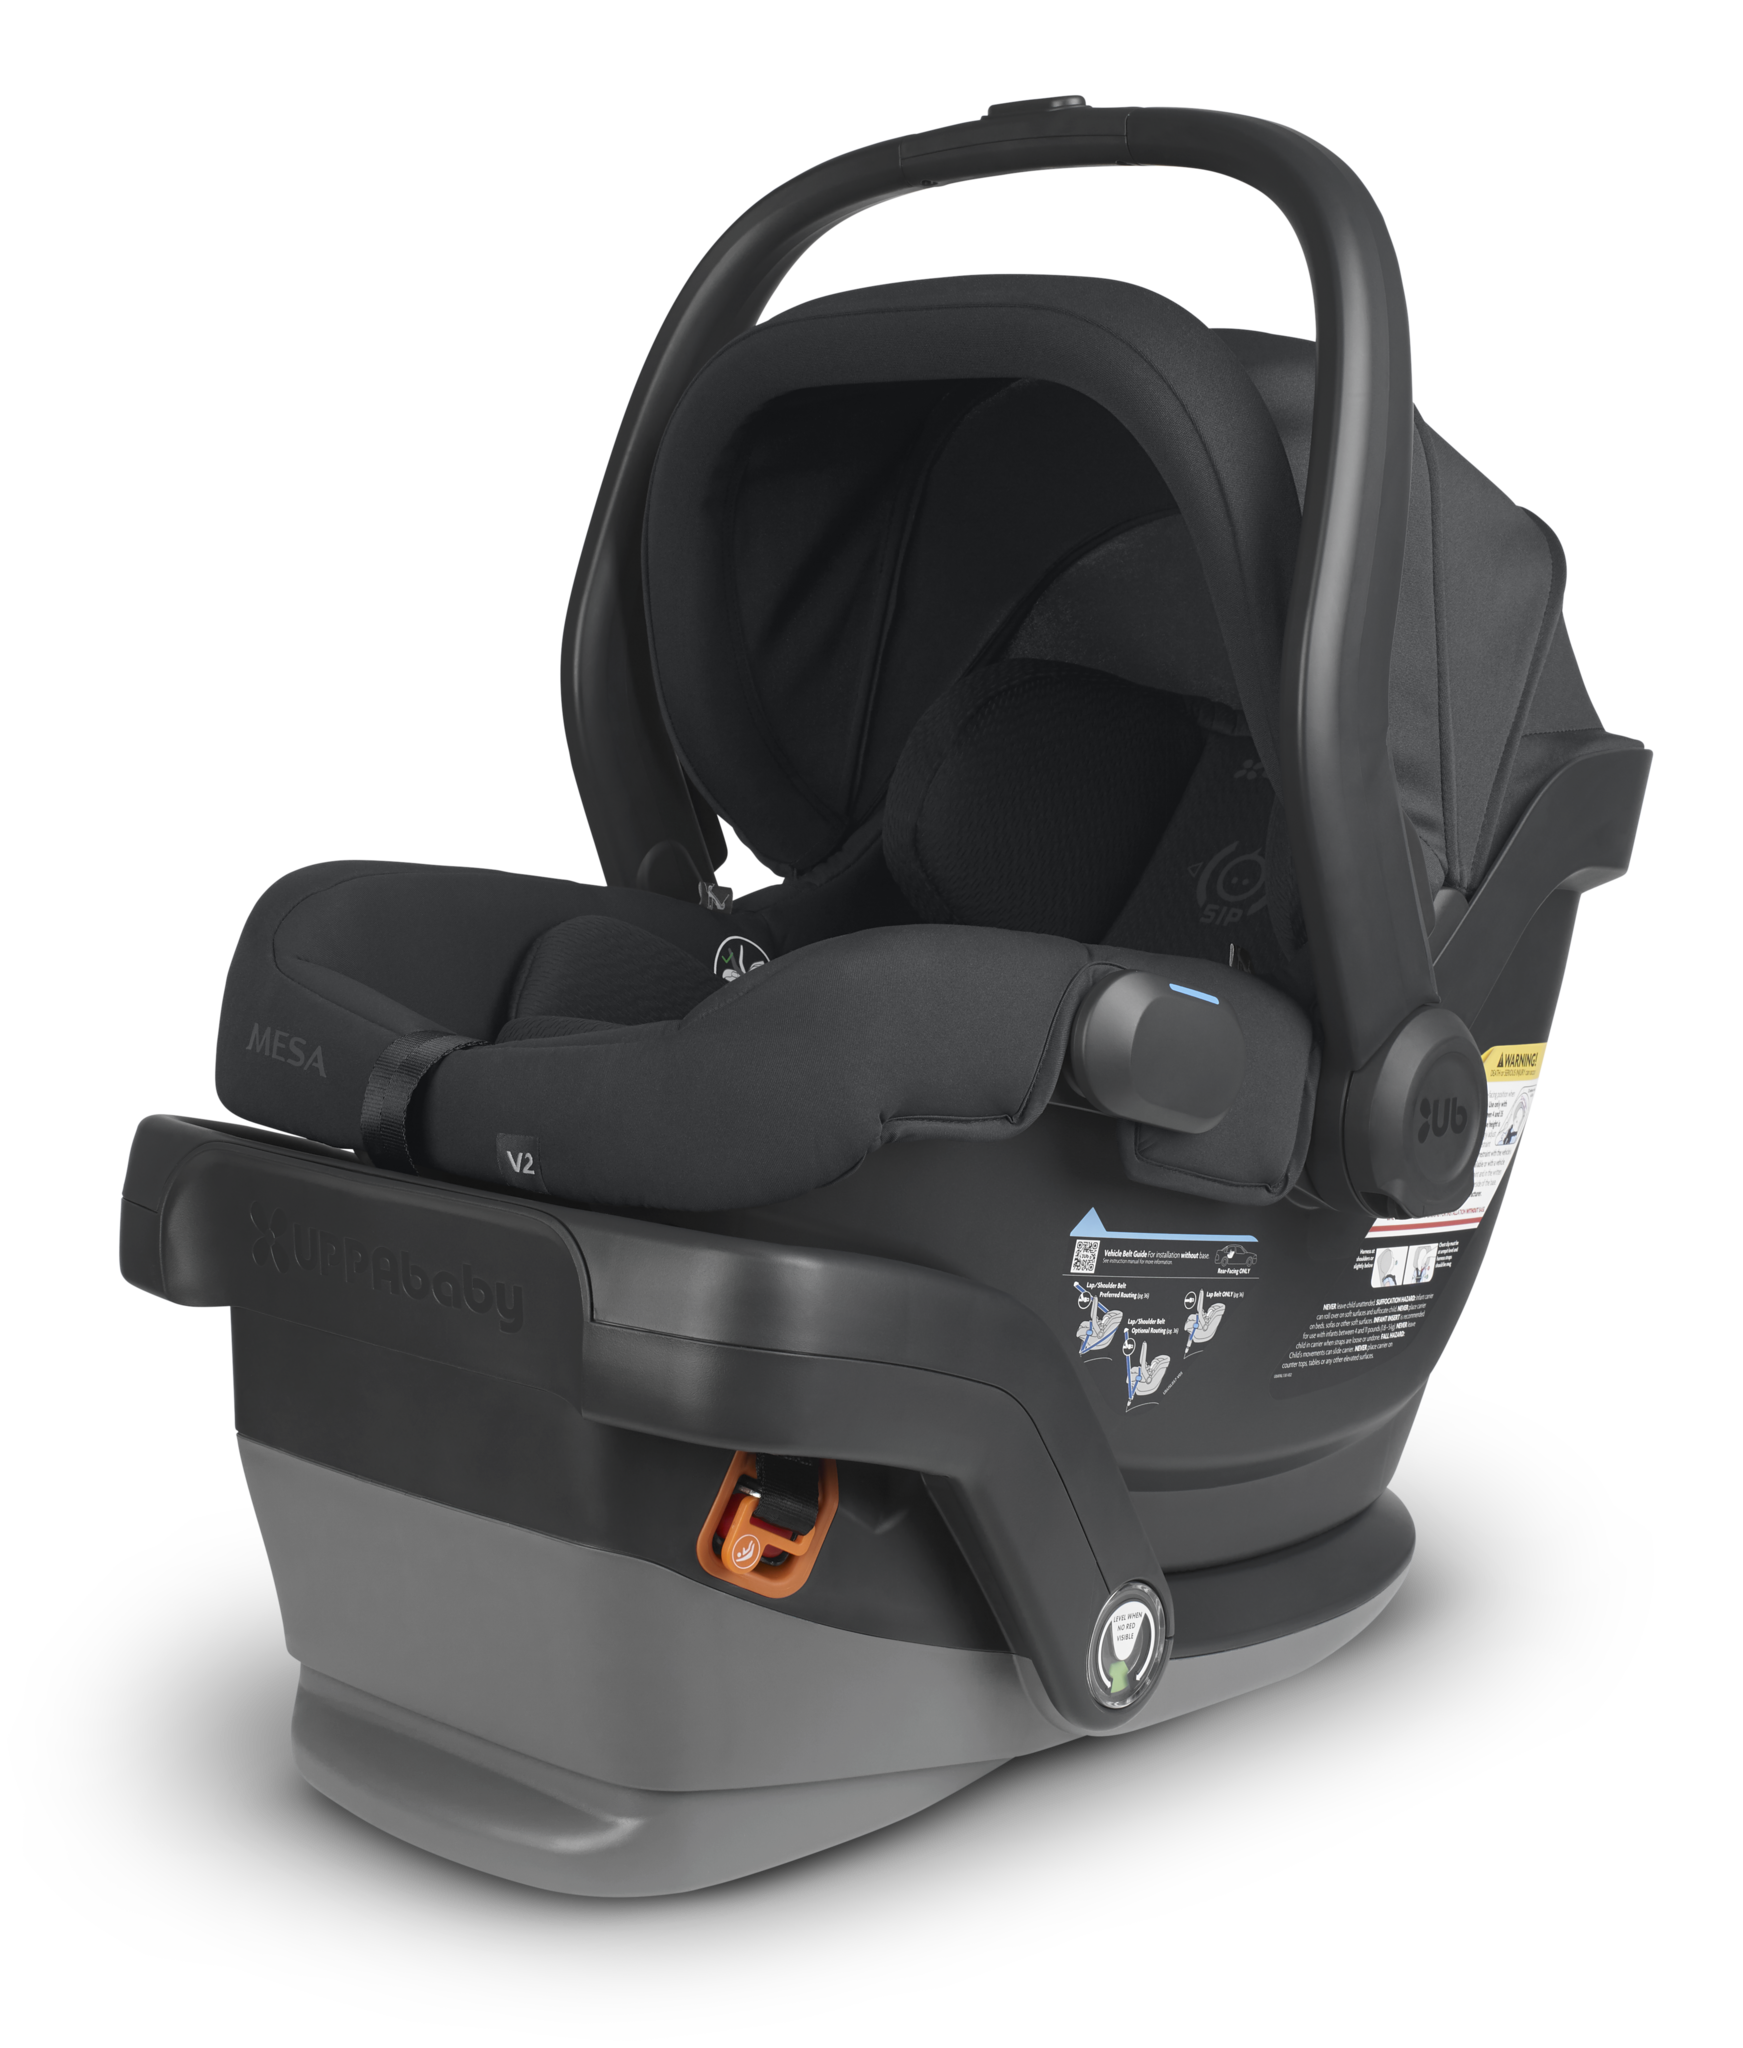 UPPAbaby UPPAbaby MESA V2 Infant Car Seat Jake (Black)